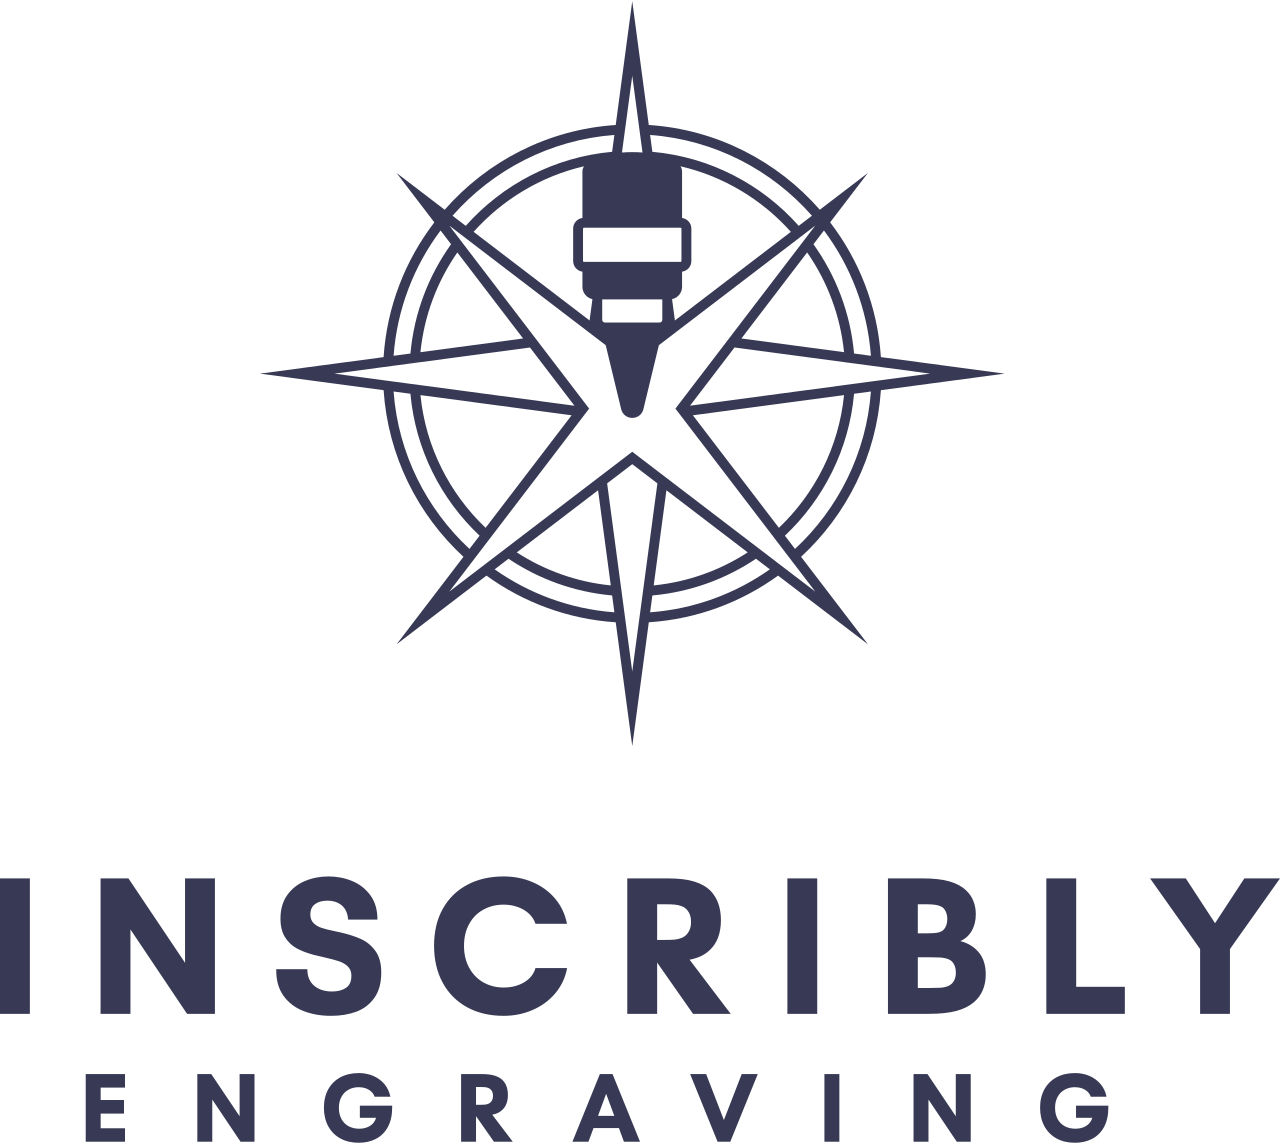 Inscribly's web page